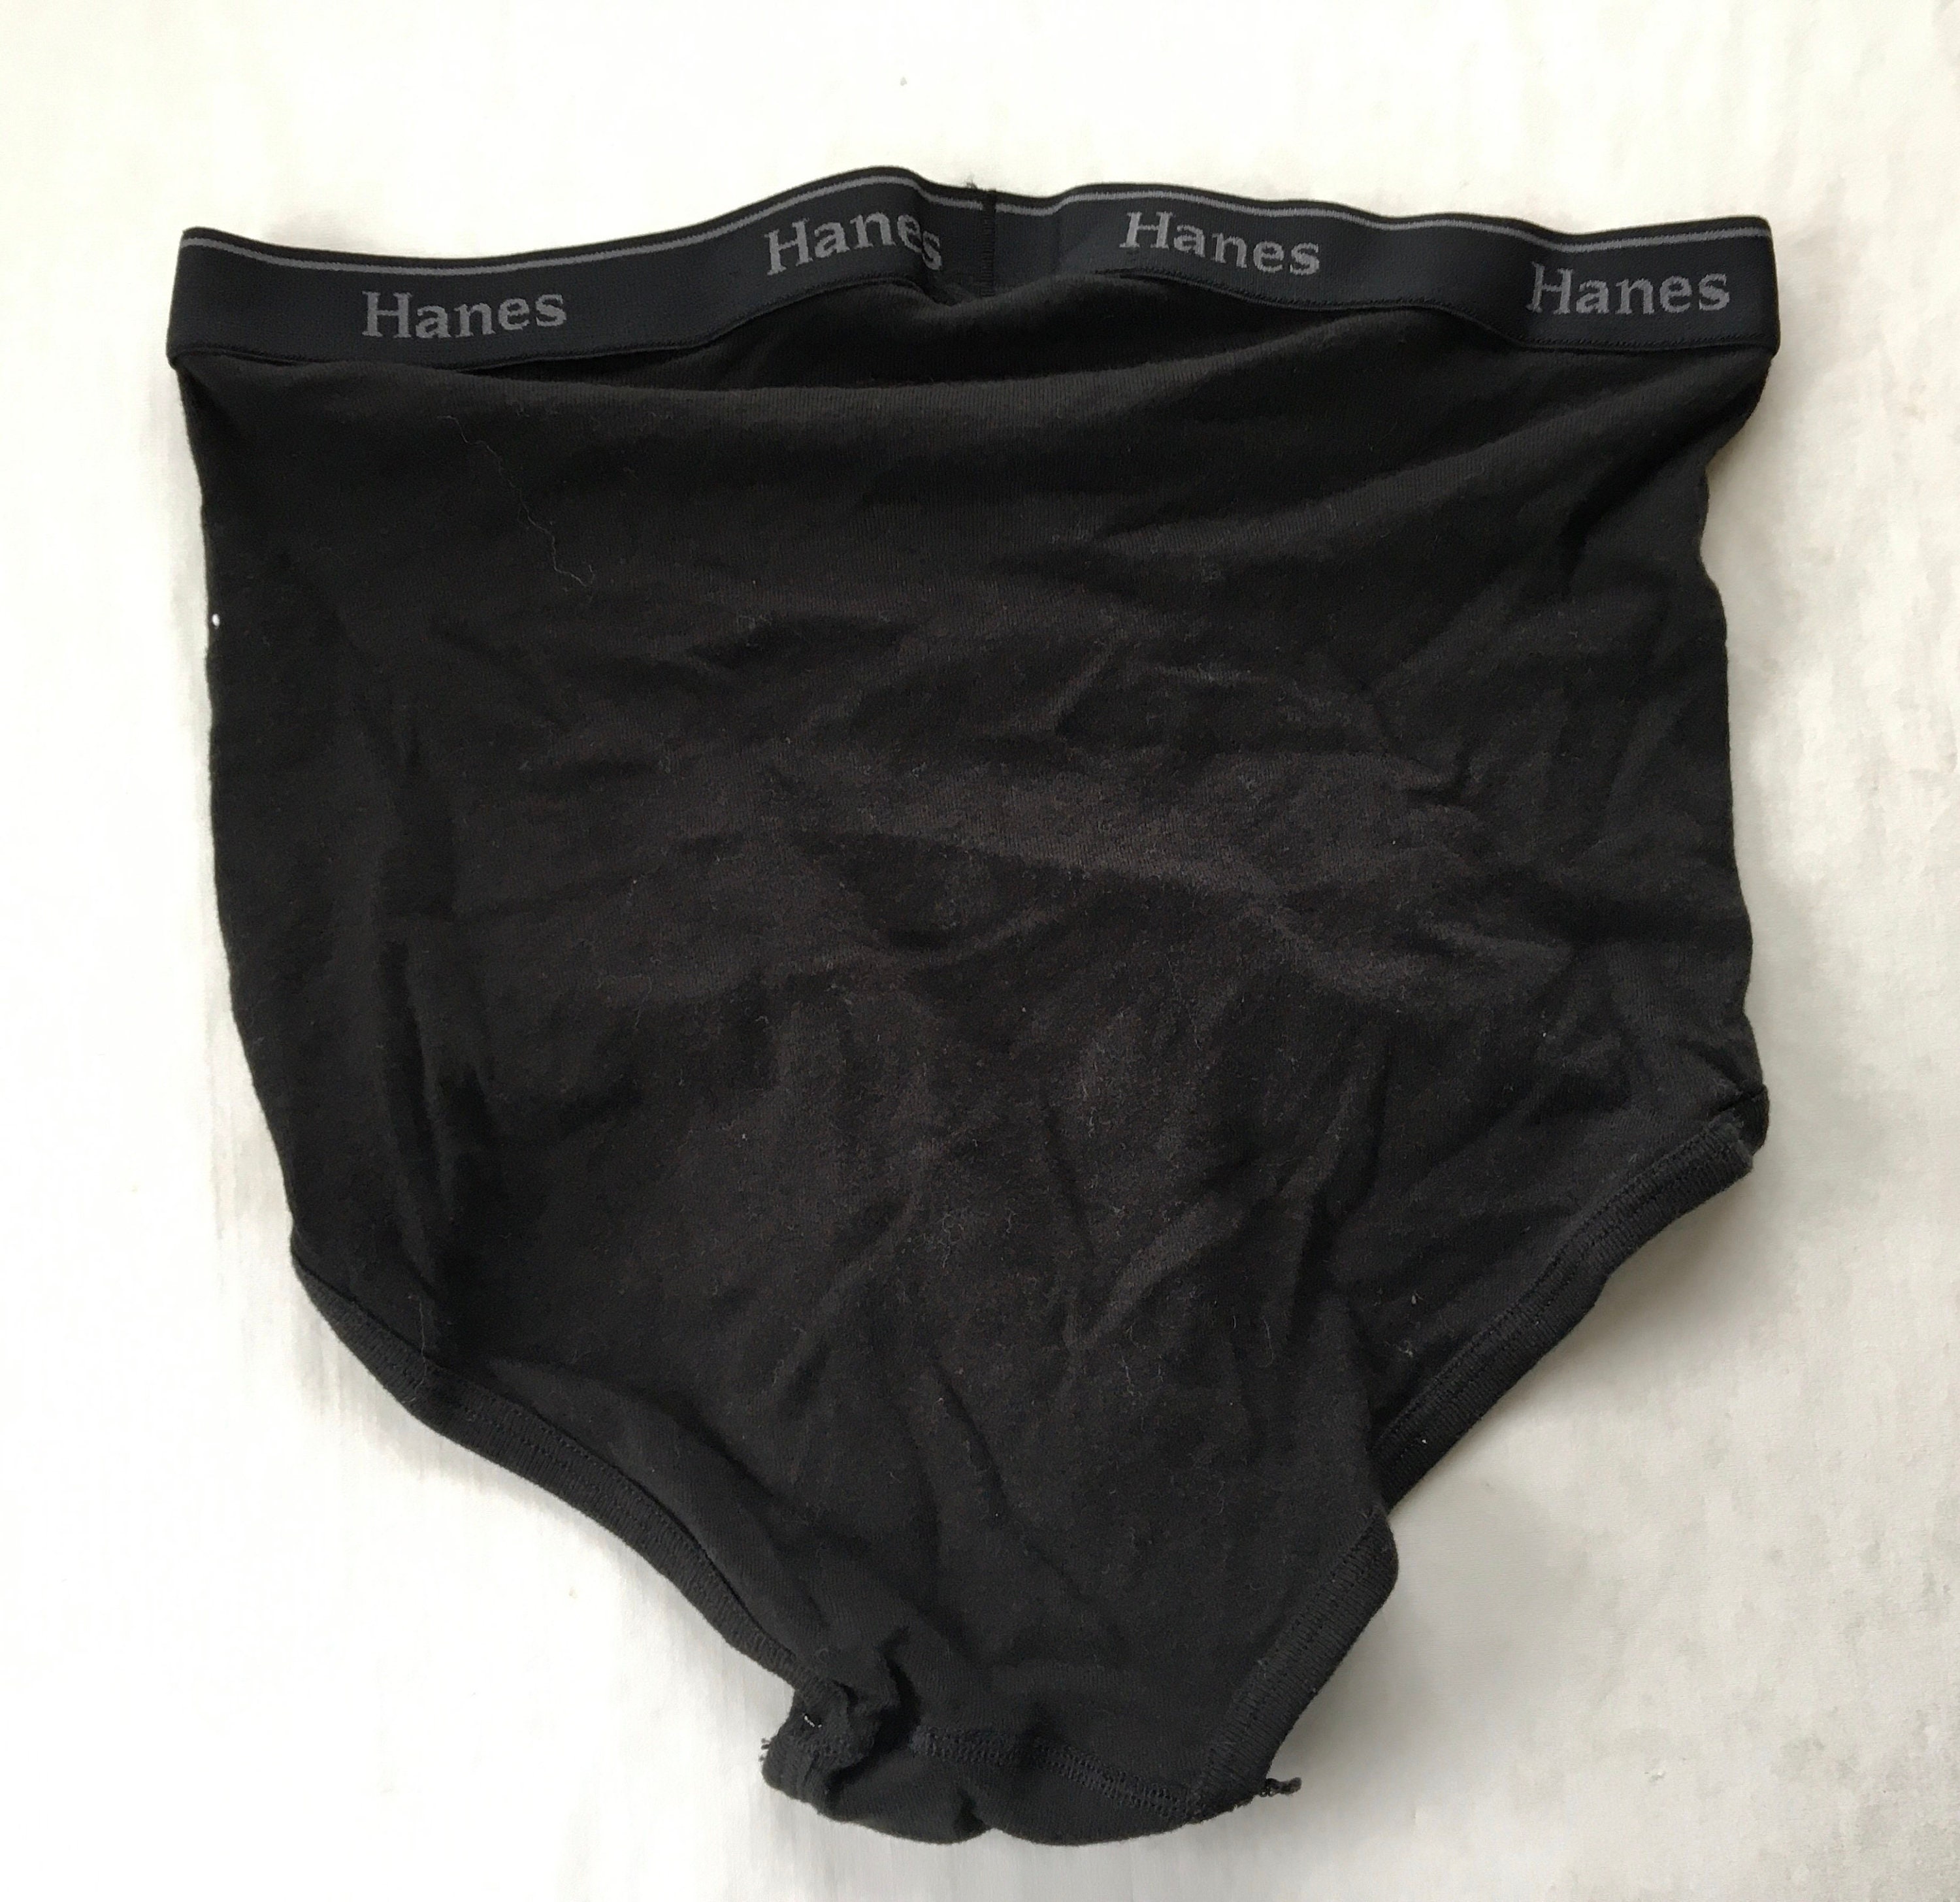 Vintage Hanes Briefs Cotton Underwear Black Gray Colored Mens Size XL 40-42  Lot of 4 